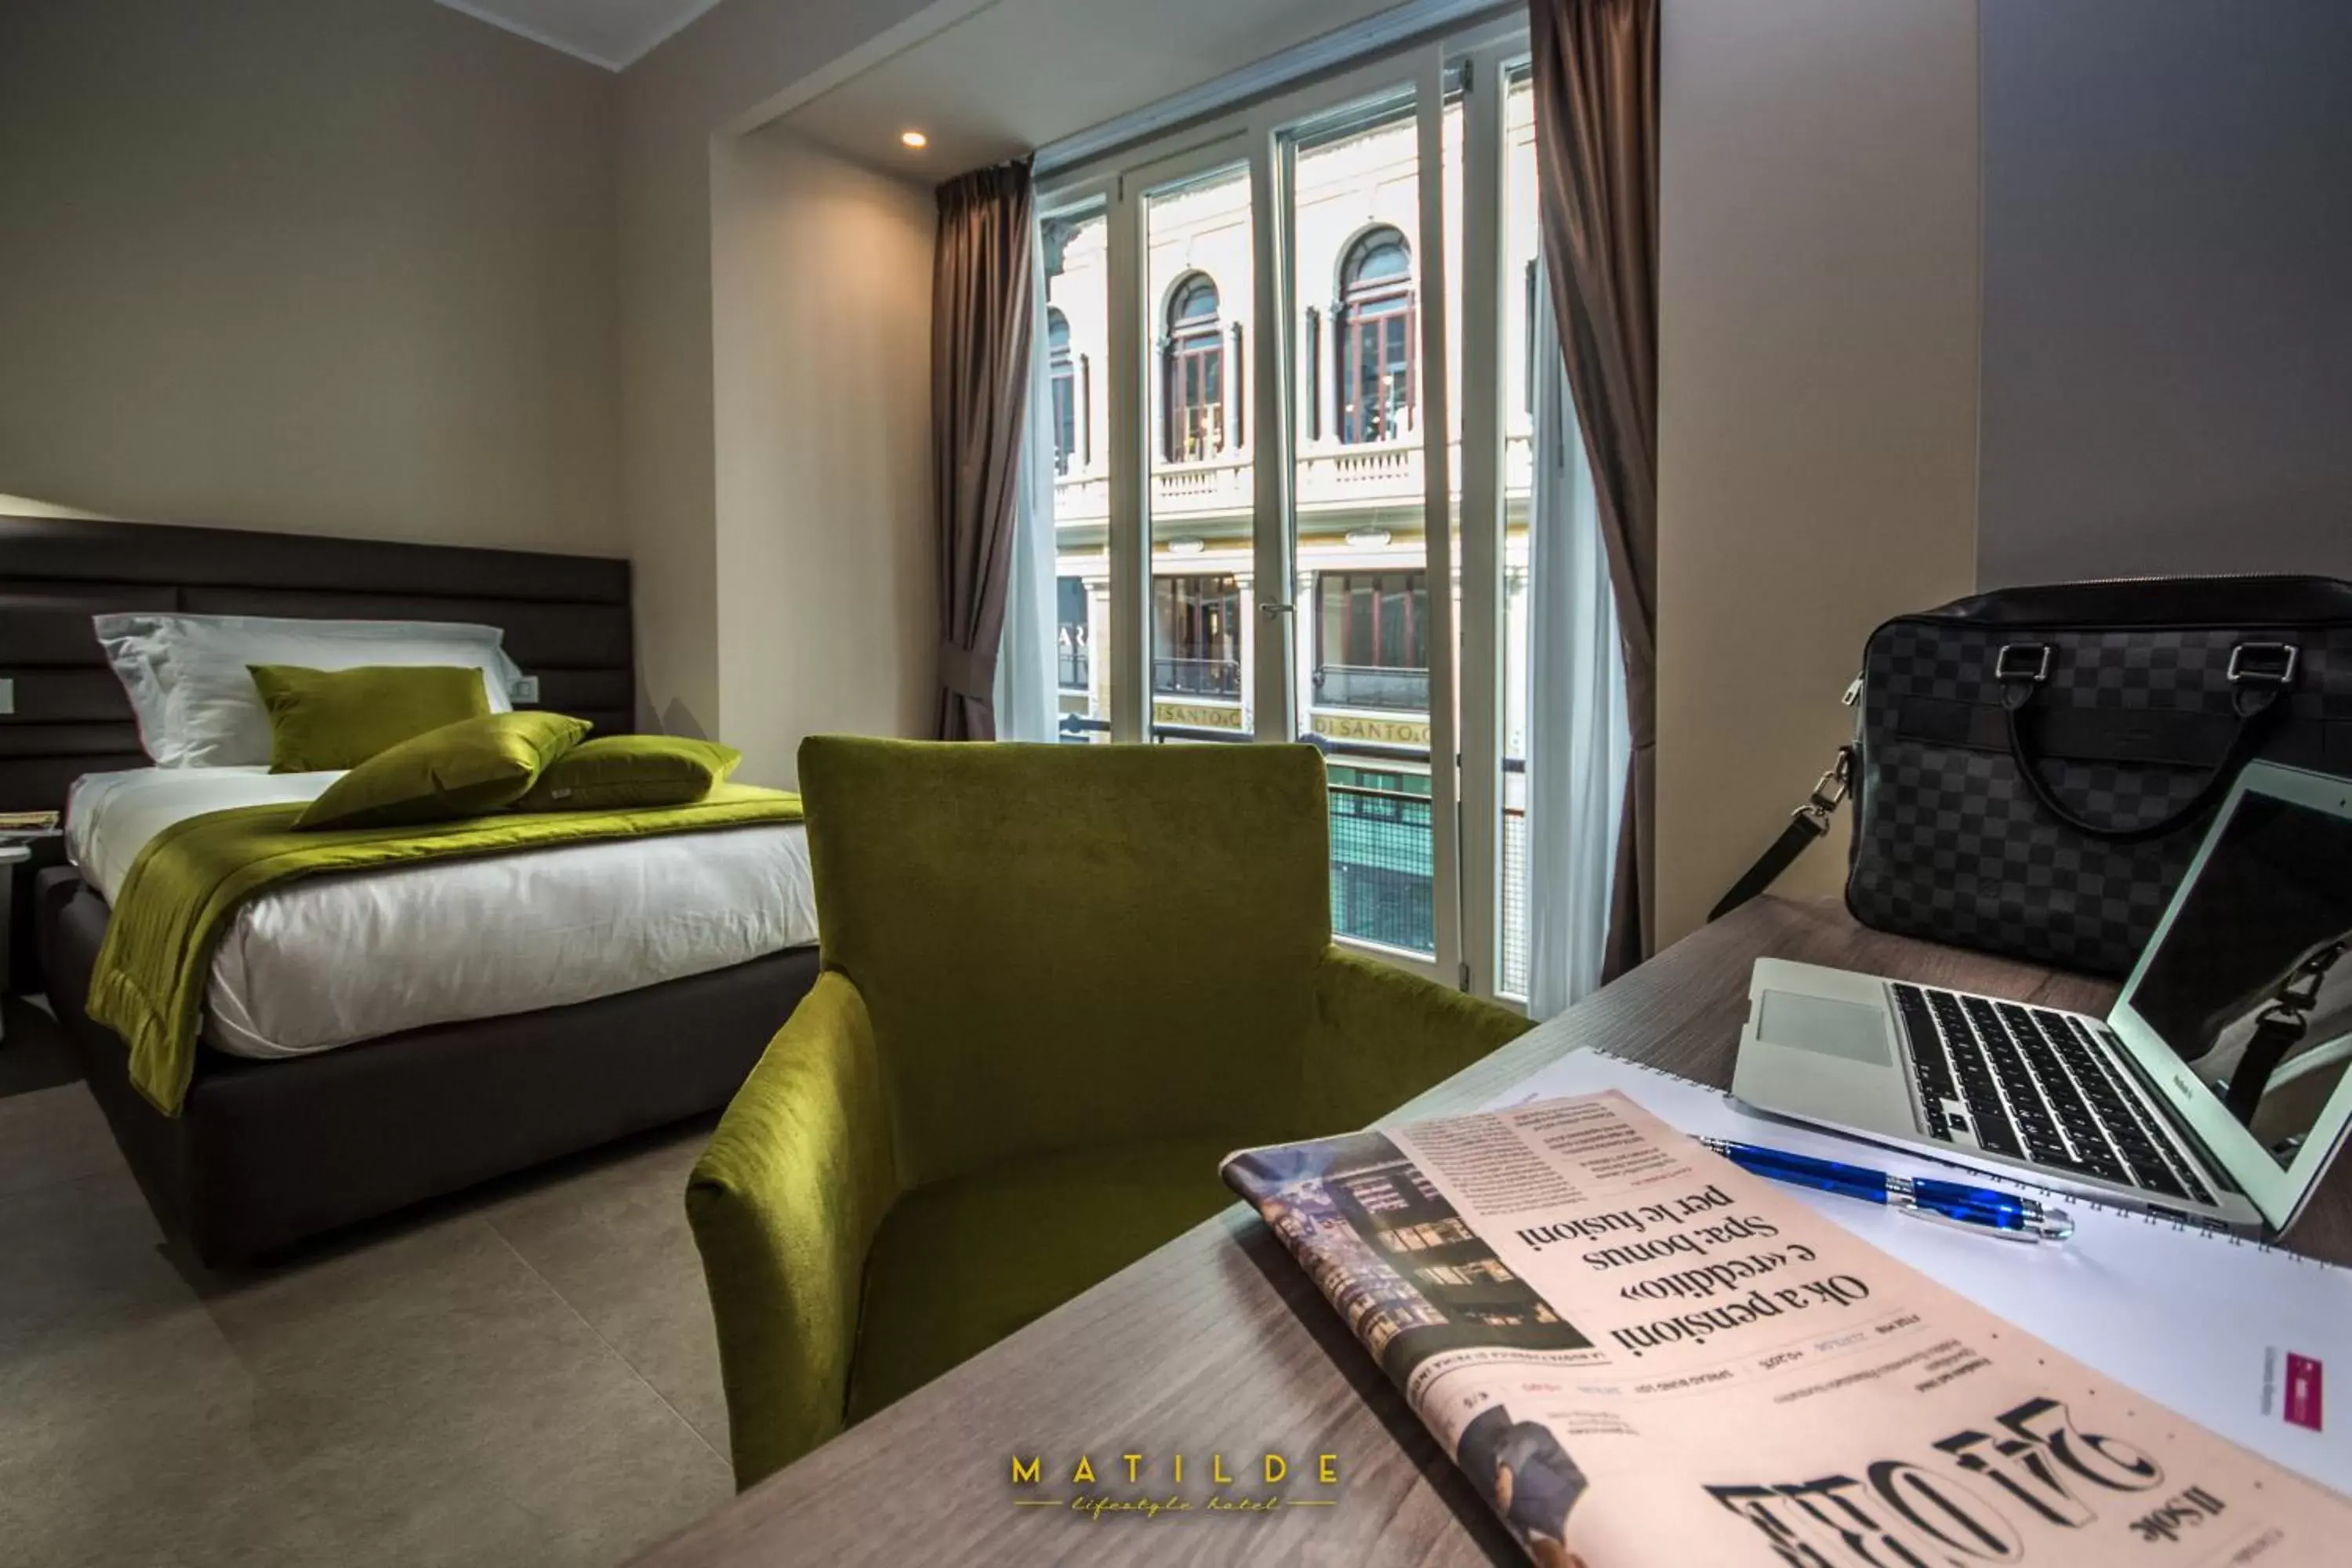 Bedroom in Hotel Matilde - Lifestyle Hotel